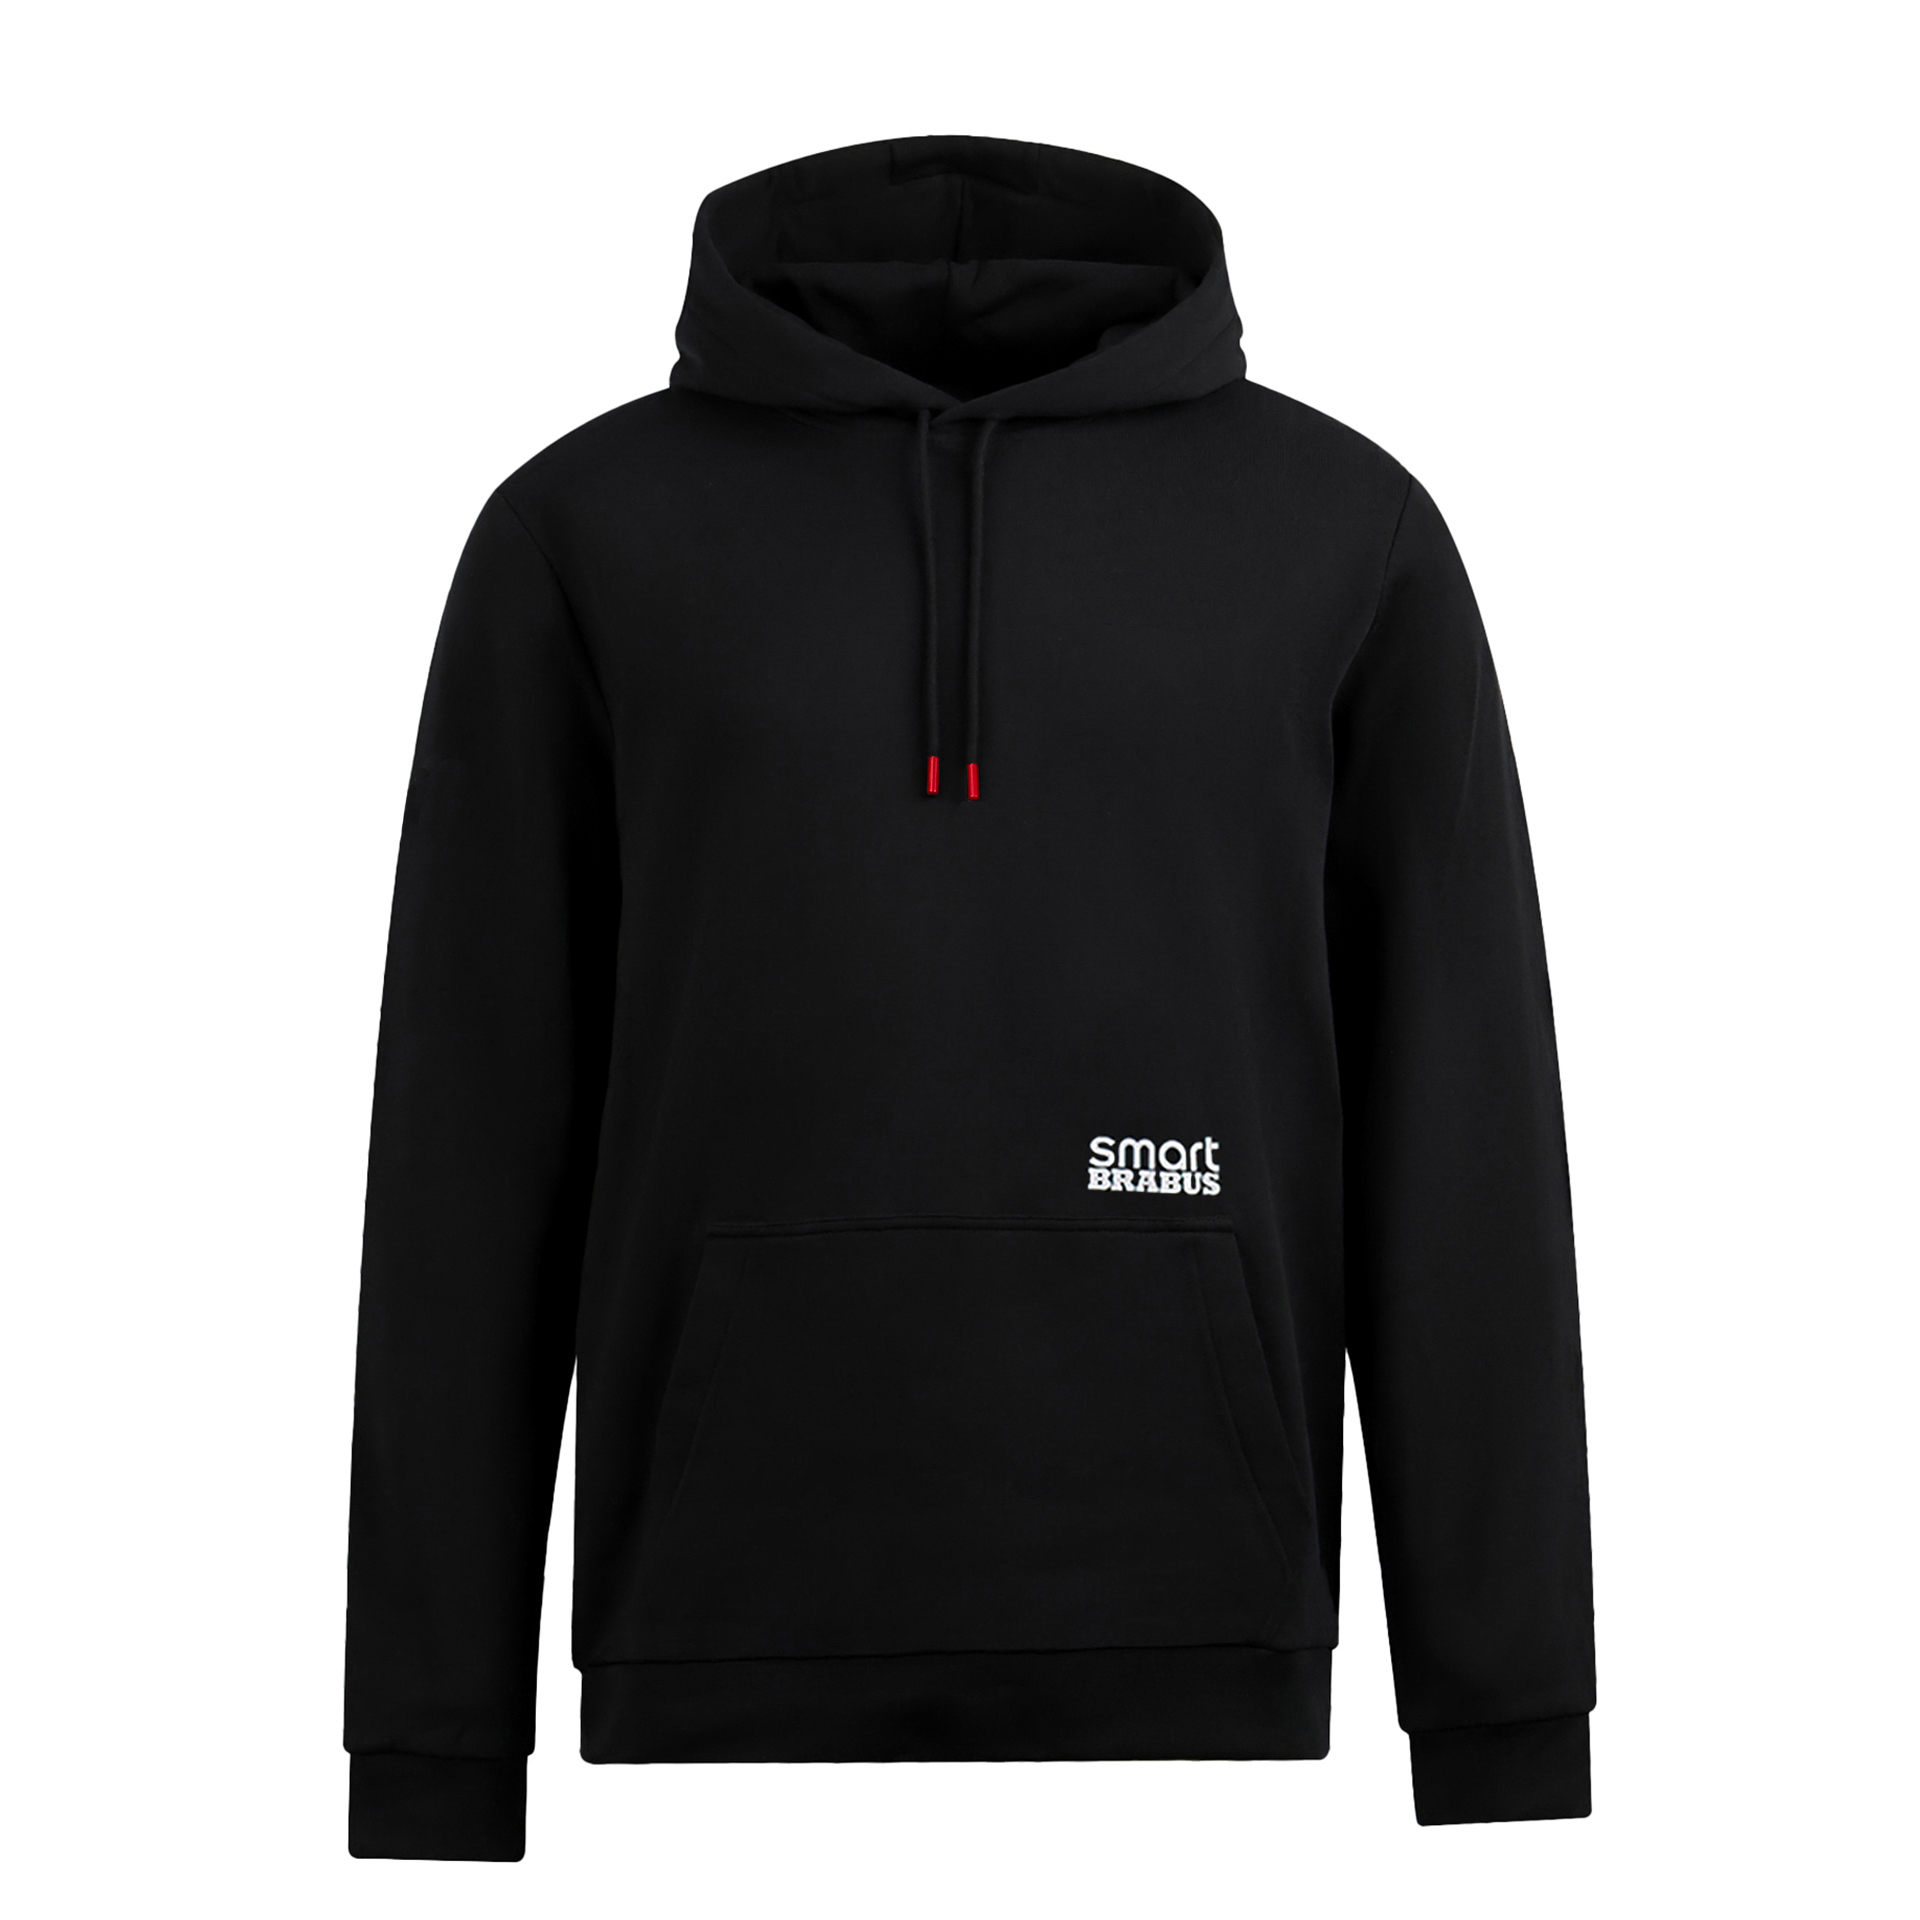 smart x BRABUS hoodie unisex black